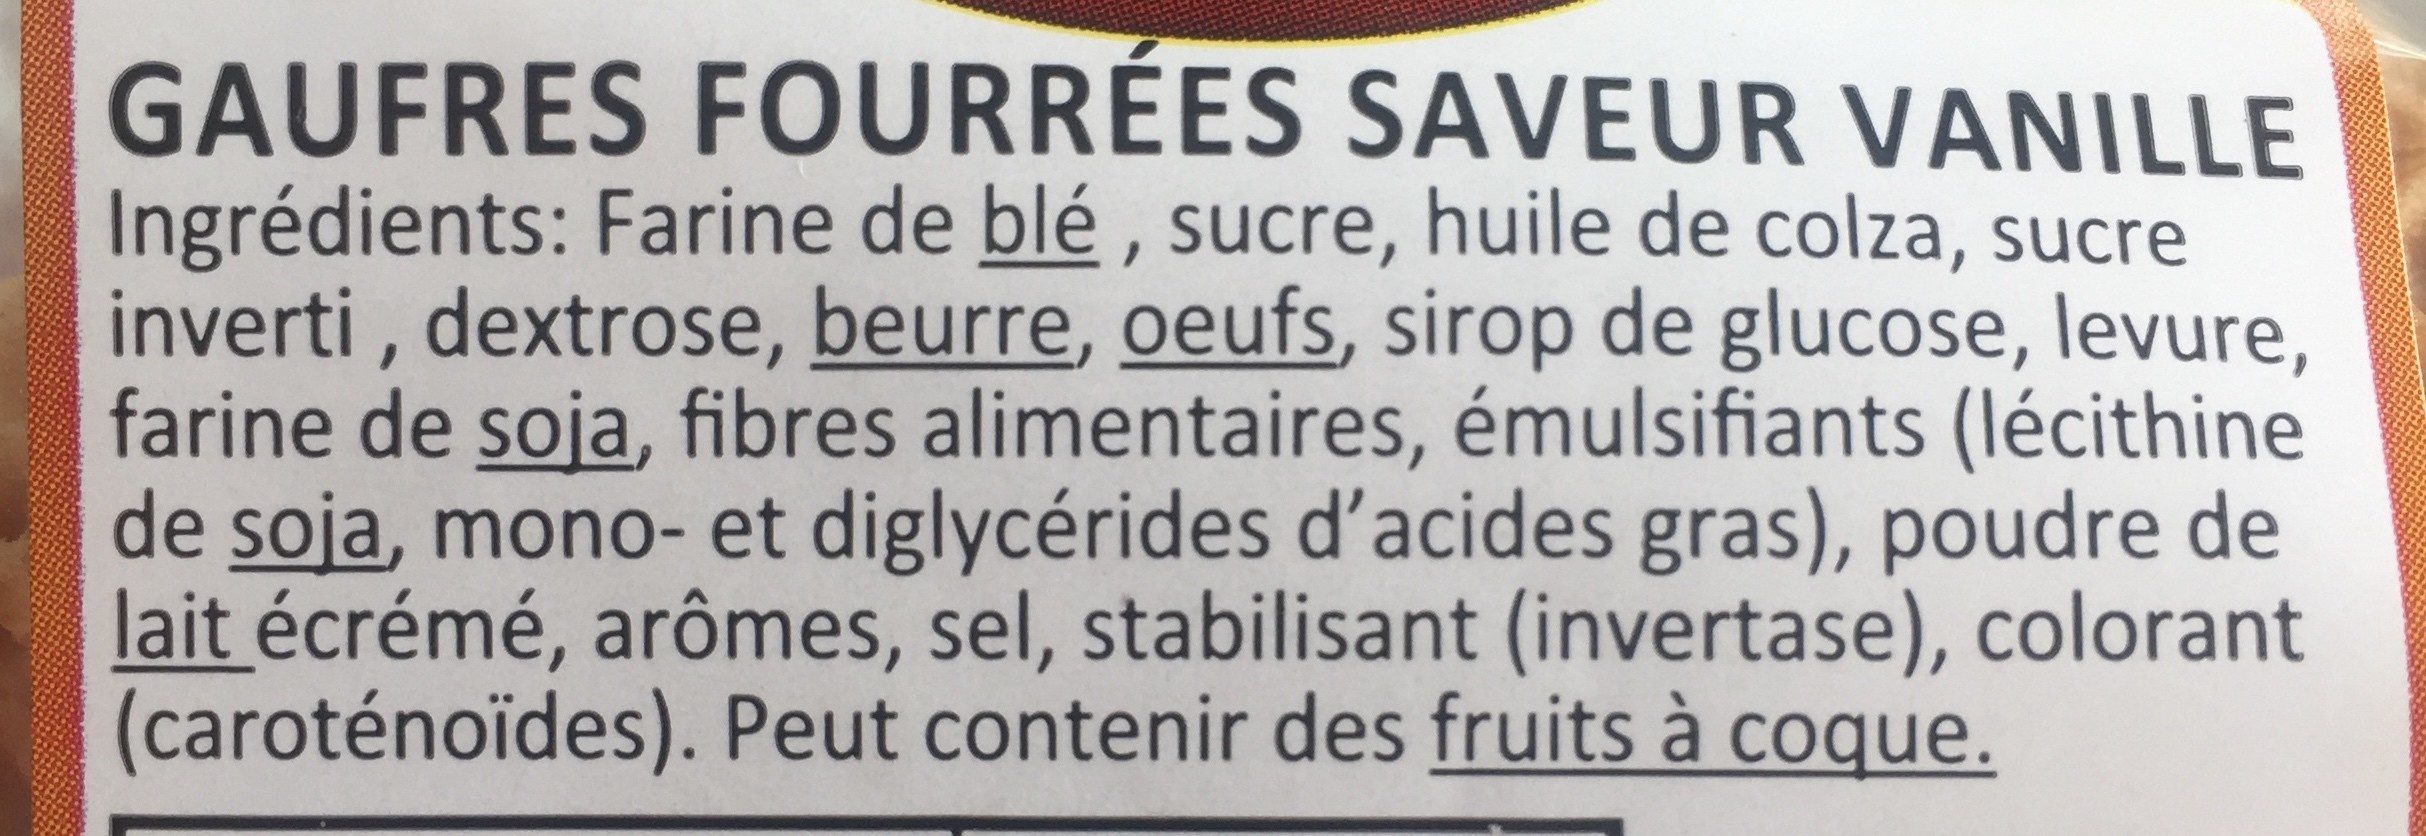 Gaufres Fourrées Saveur Vanille - Ingredients - fr